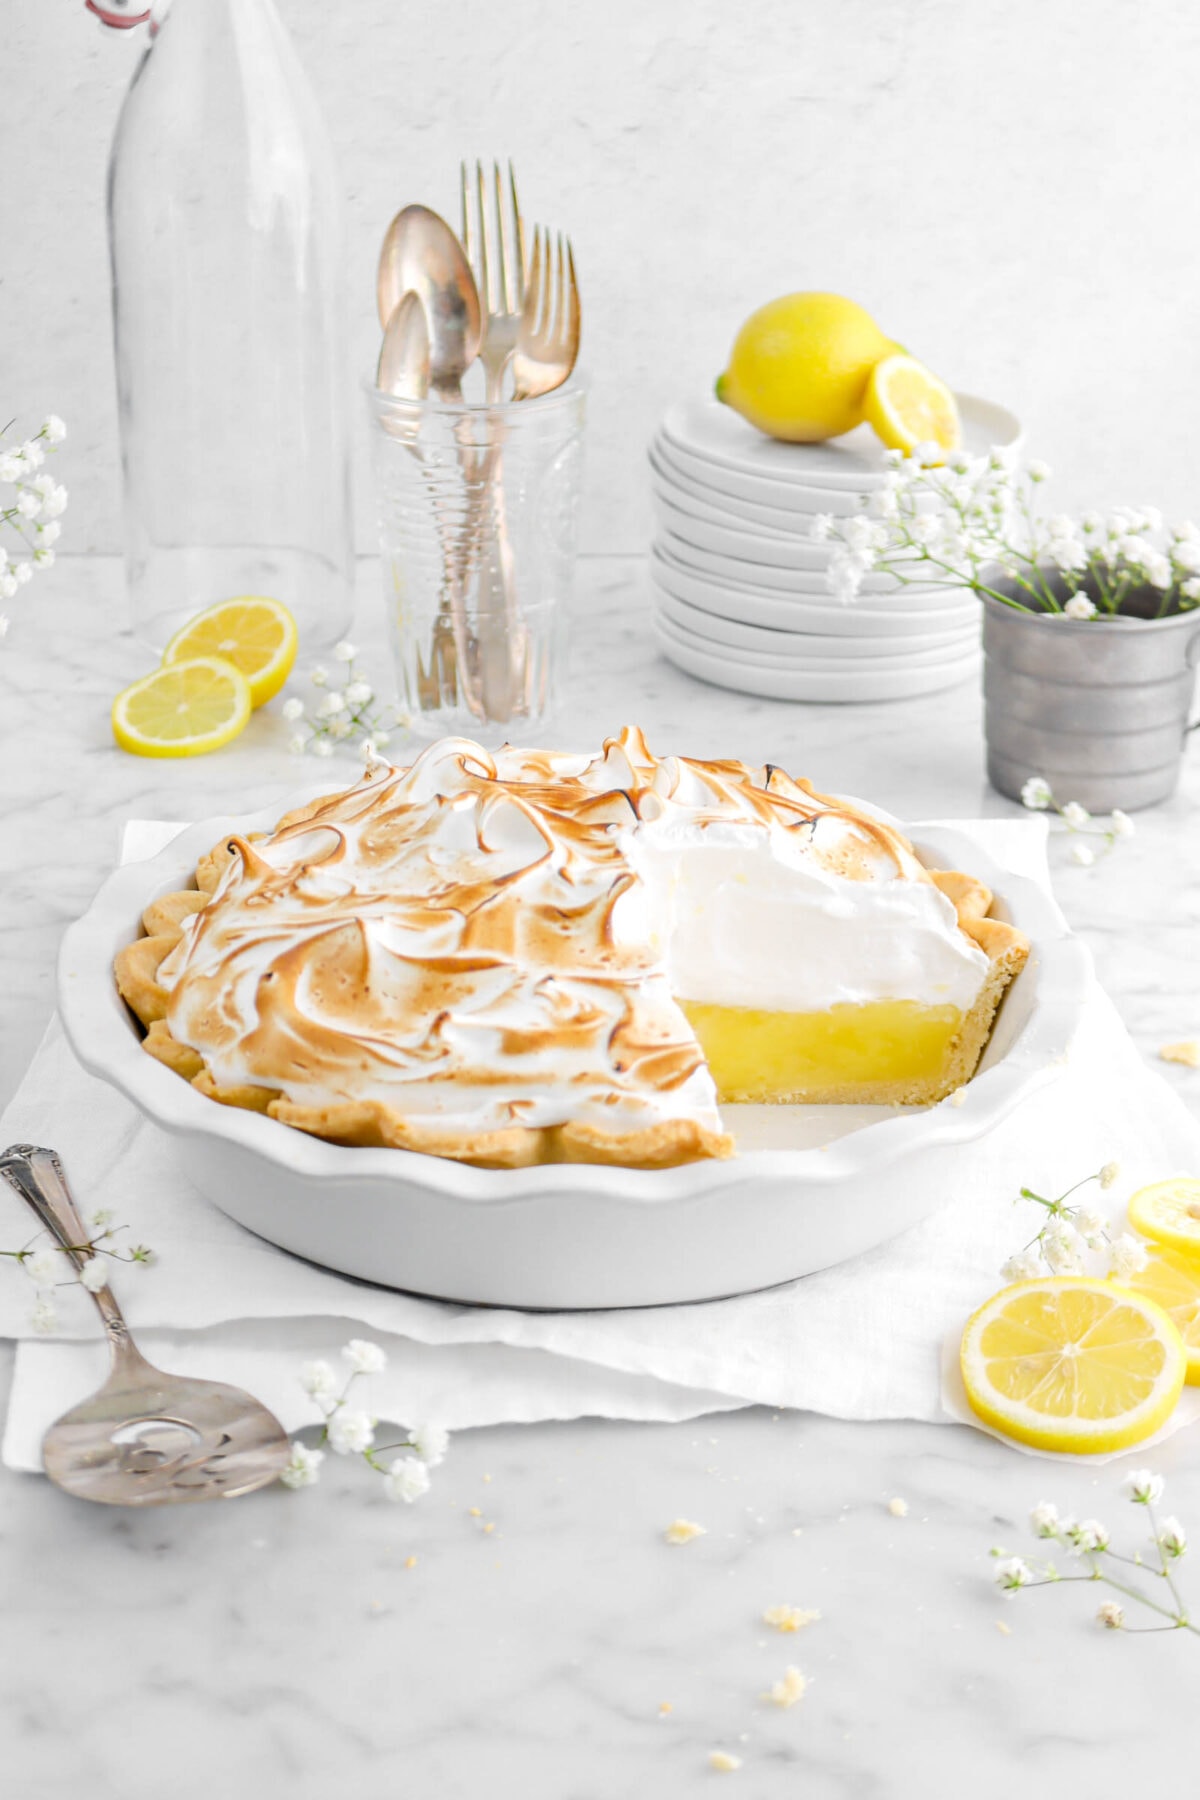 front shot of lemon meringue pie with slice missing